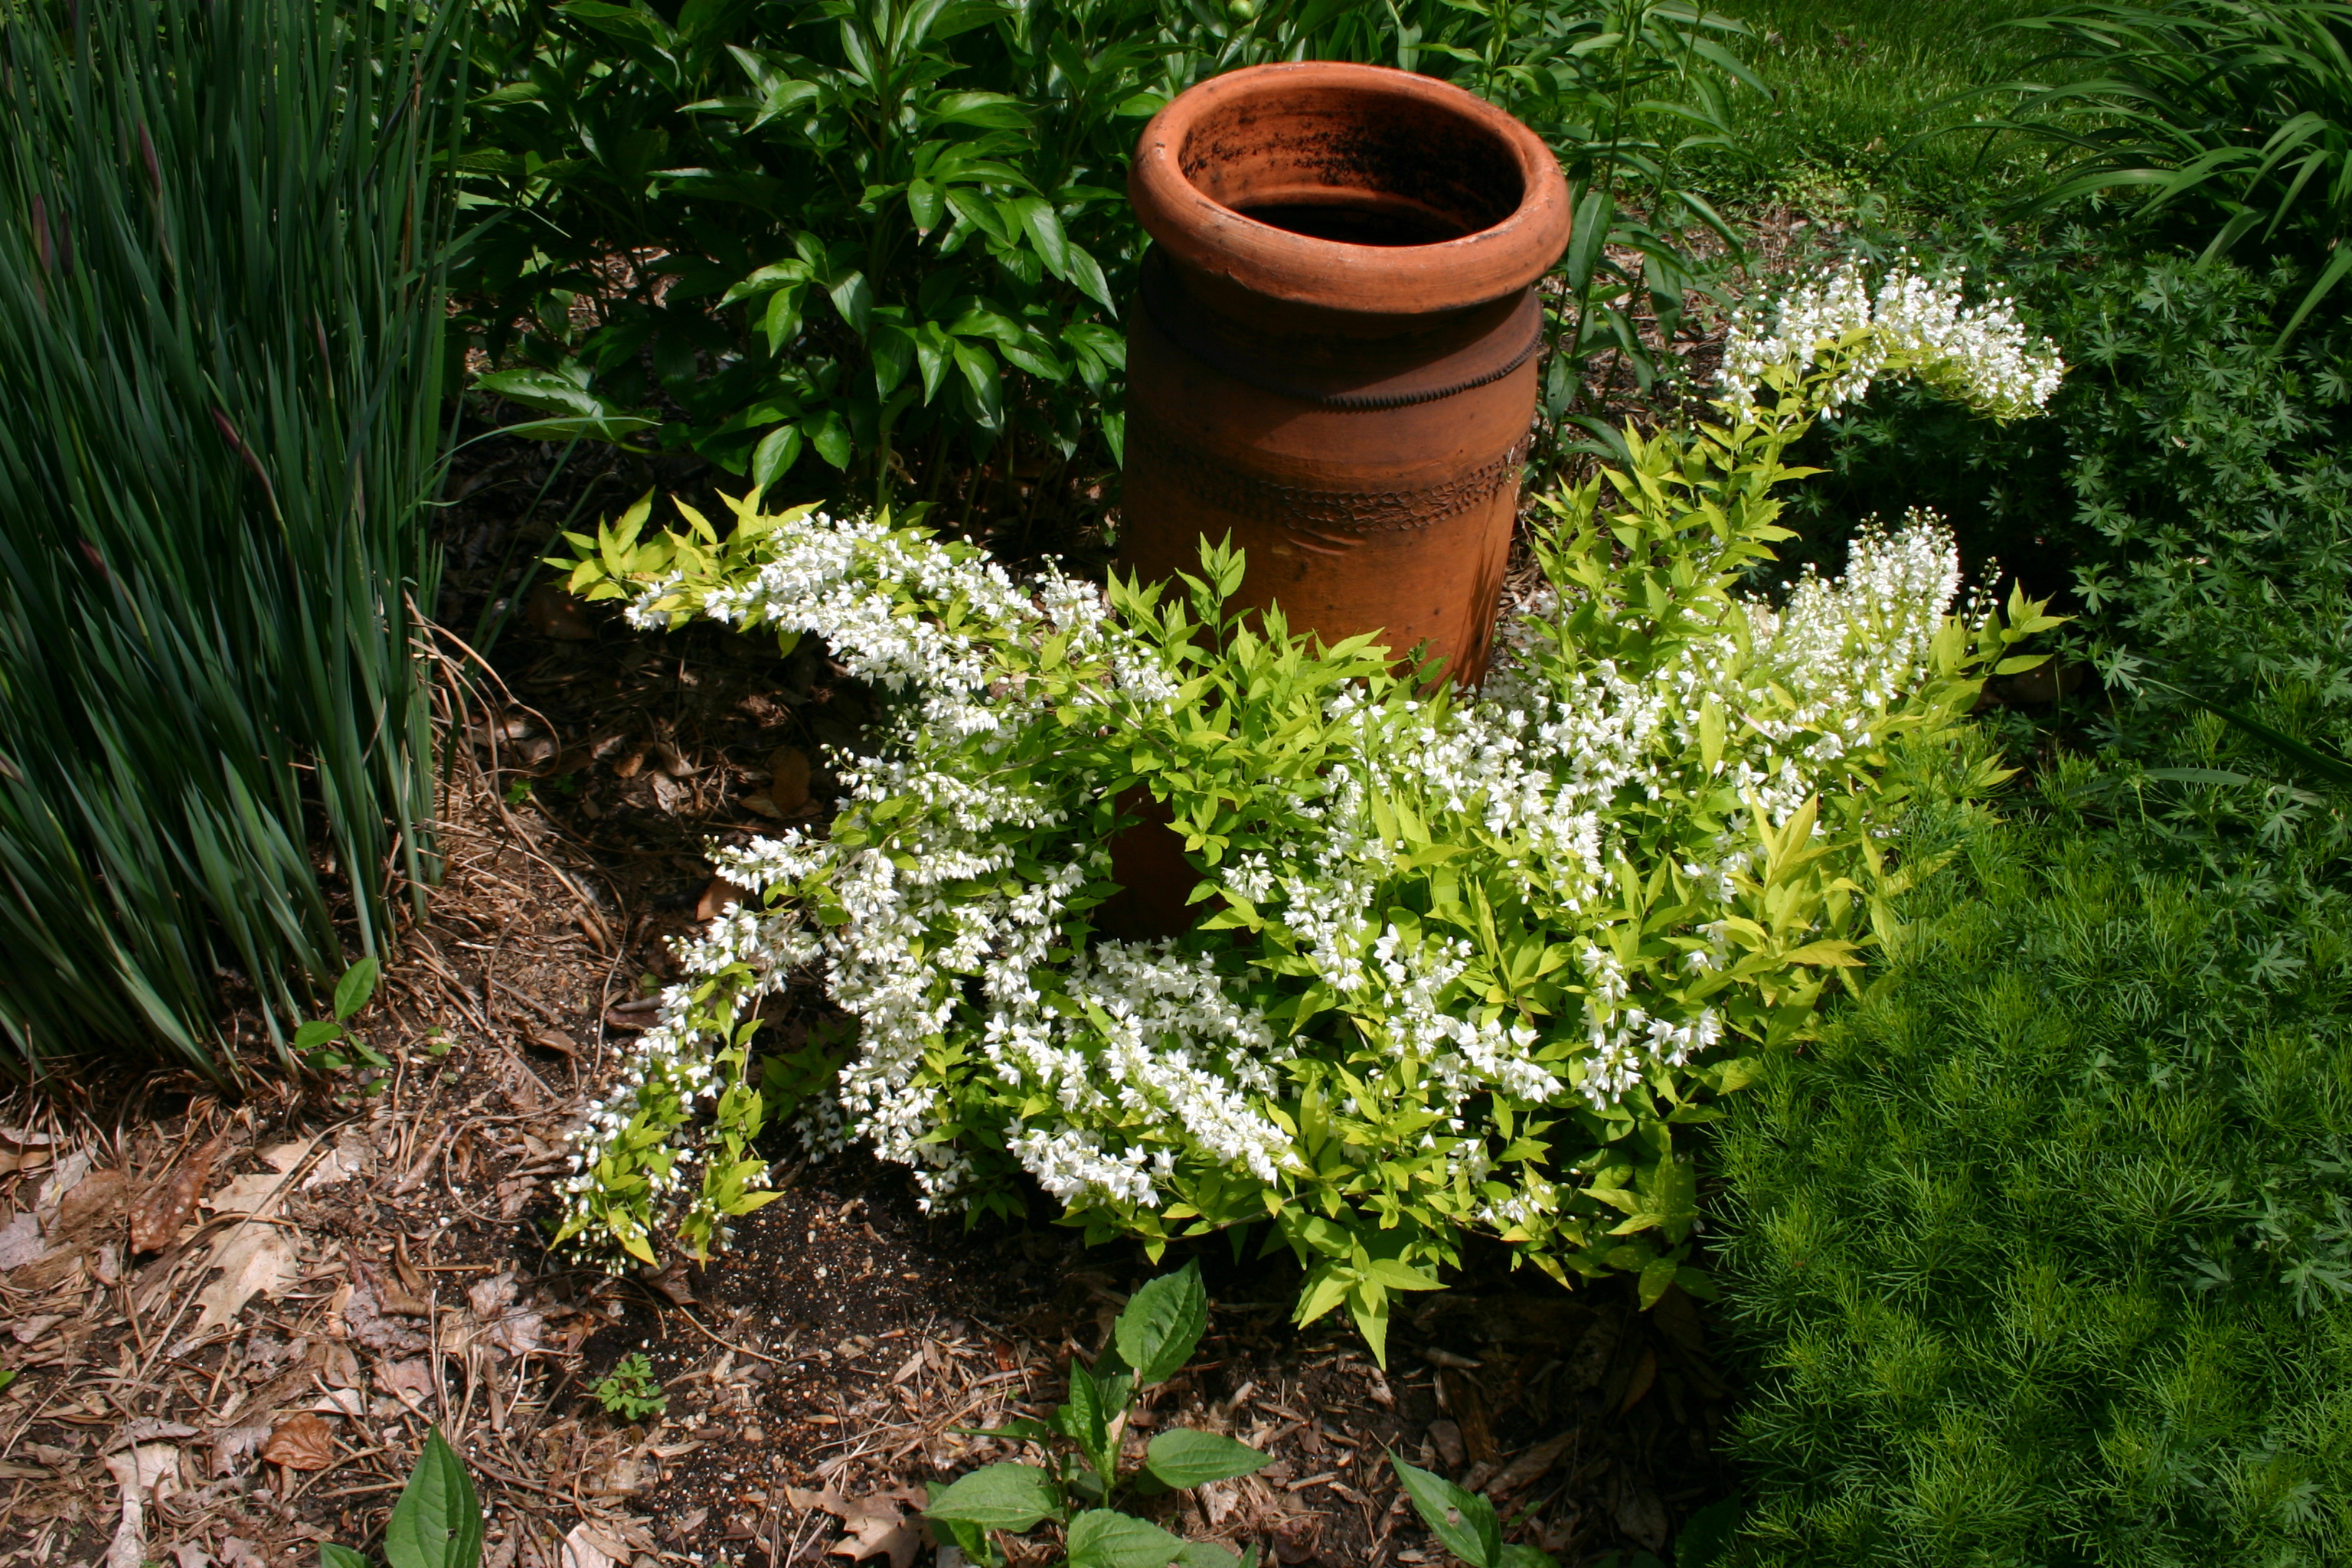 Deutzia Chardonnay with its smll white flowers